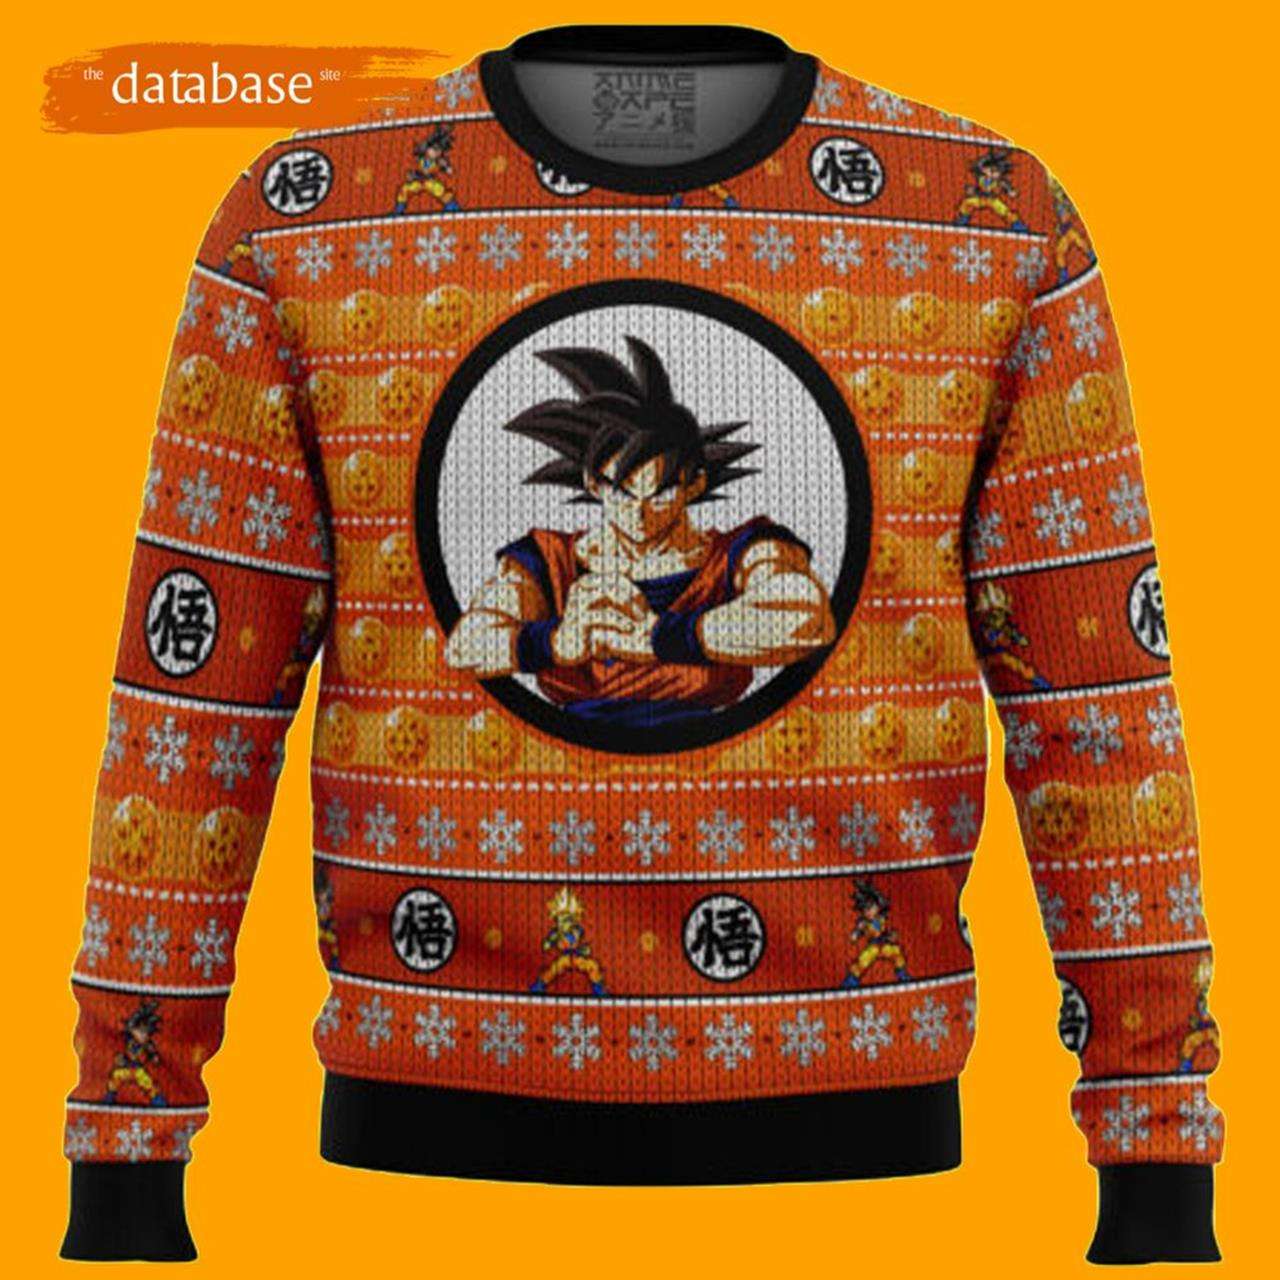 Dragonball Z Son Goku Ugly Christmas Sweater Xmas